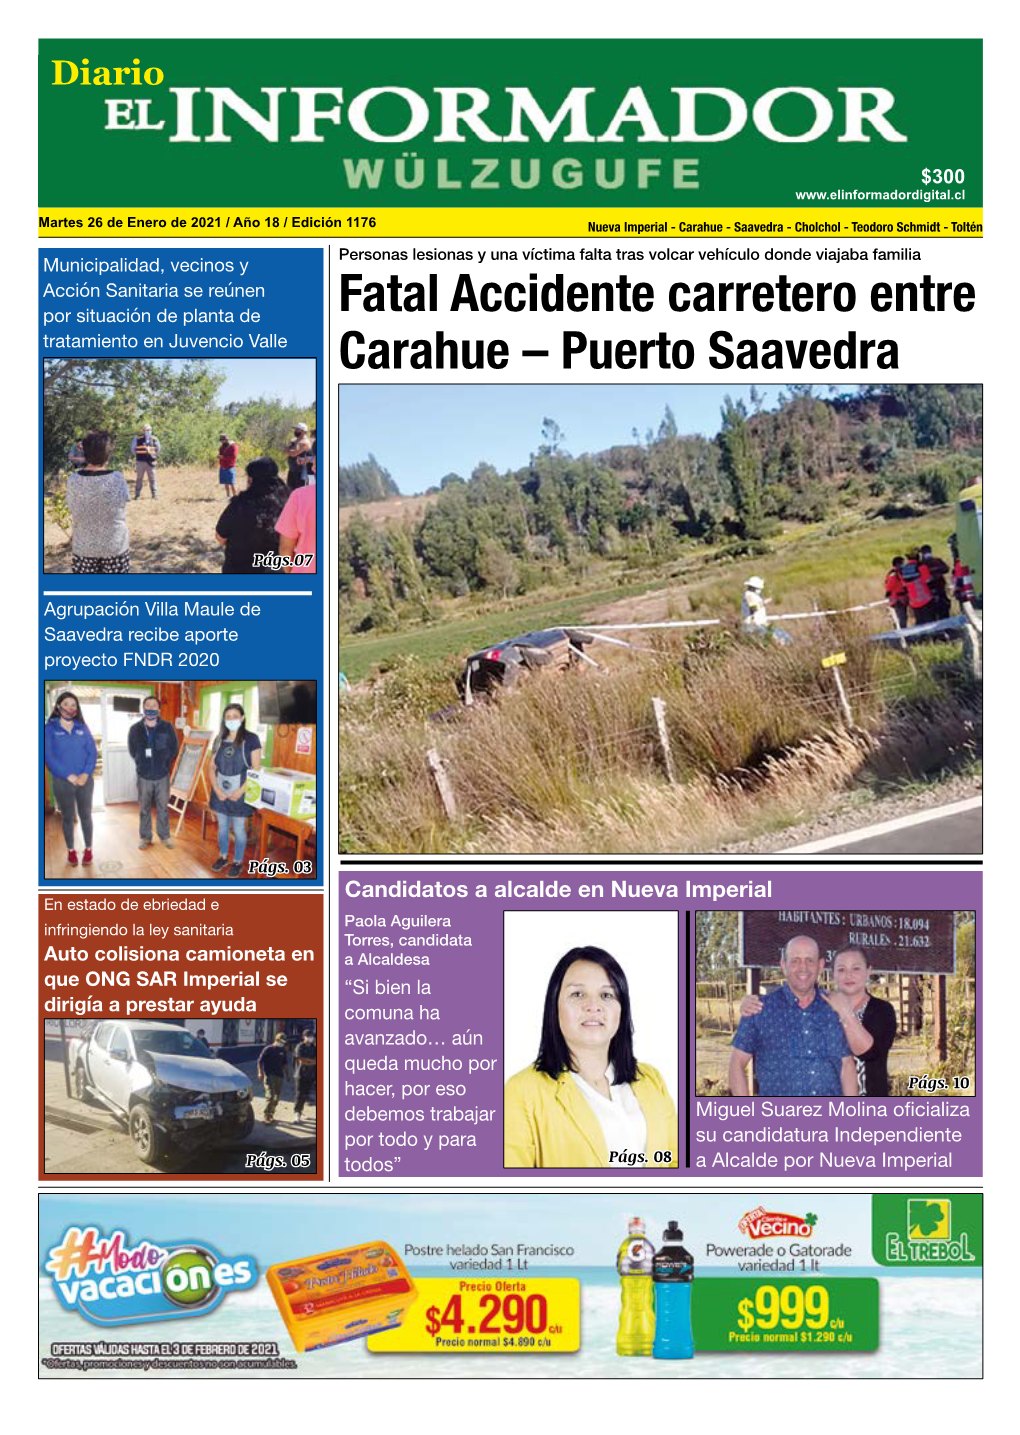 Fatal Accidente Carretero Entre Carahue – Puerto Saavedra